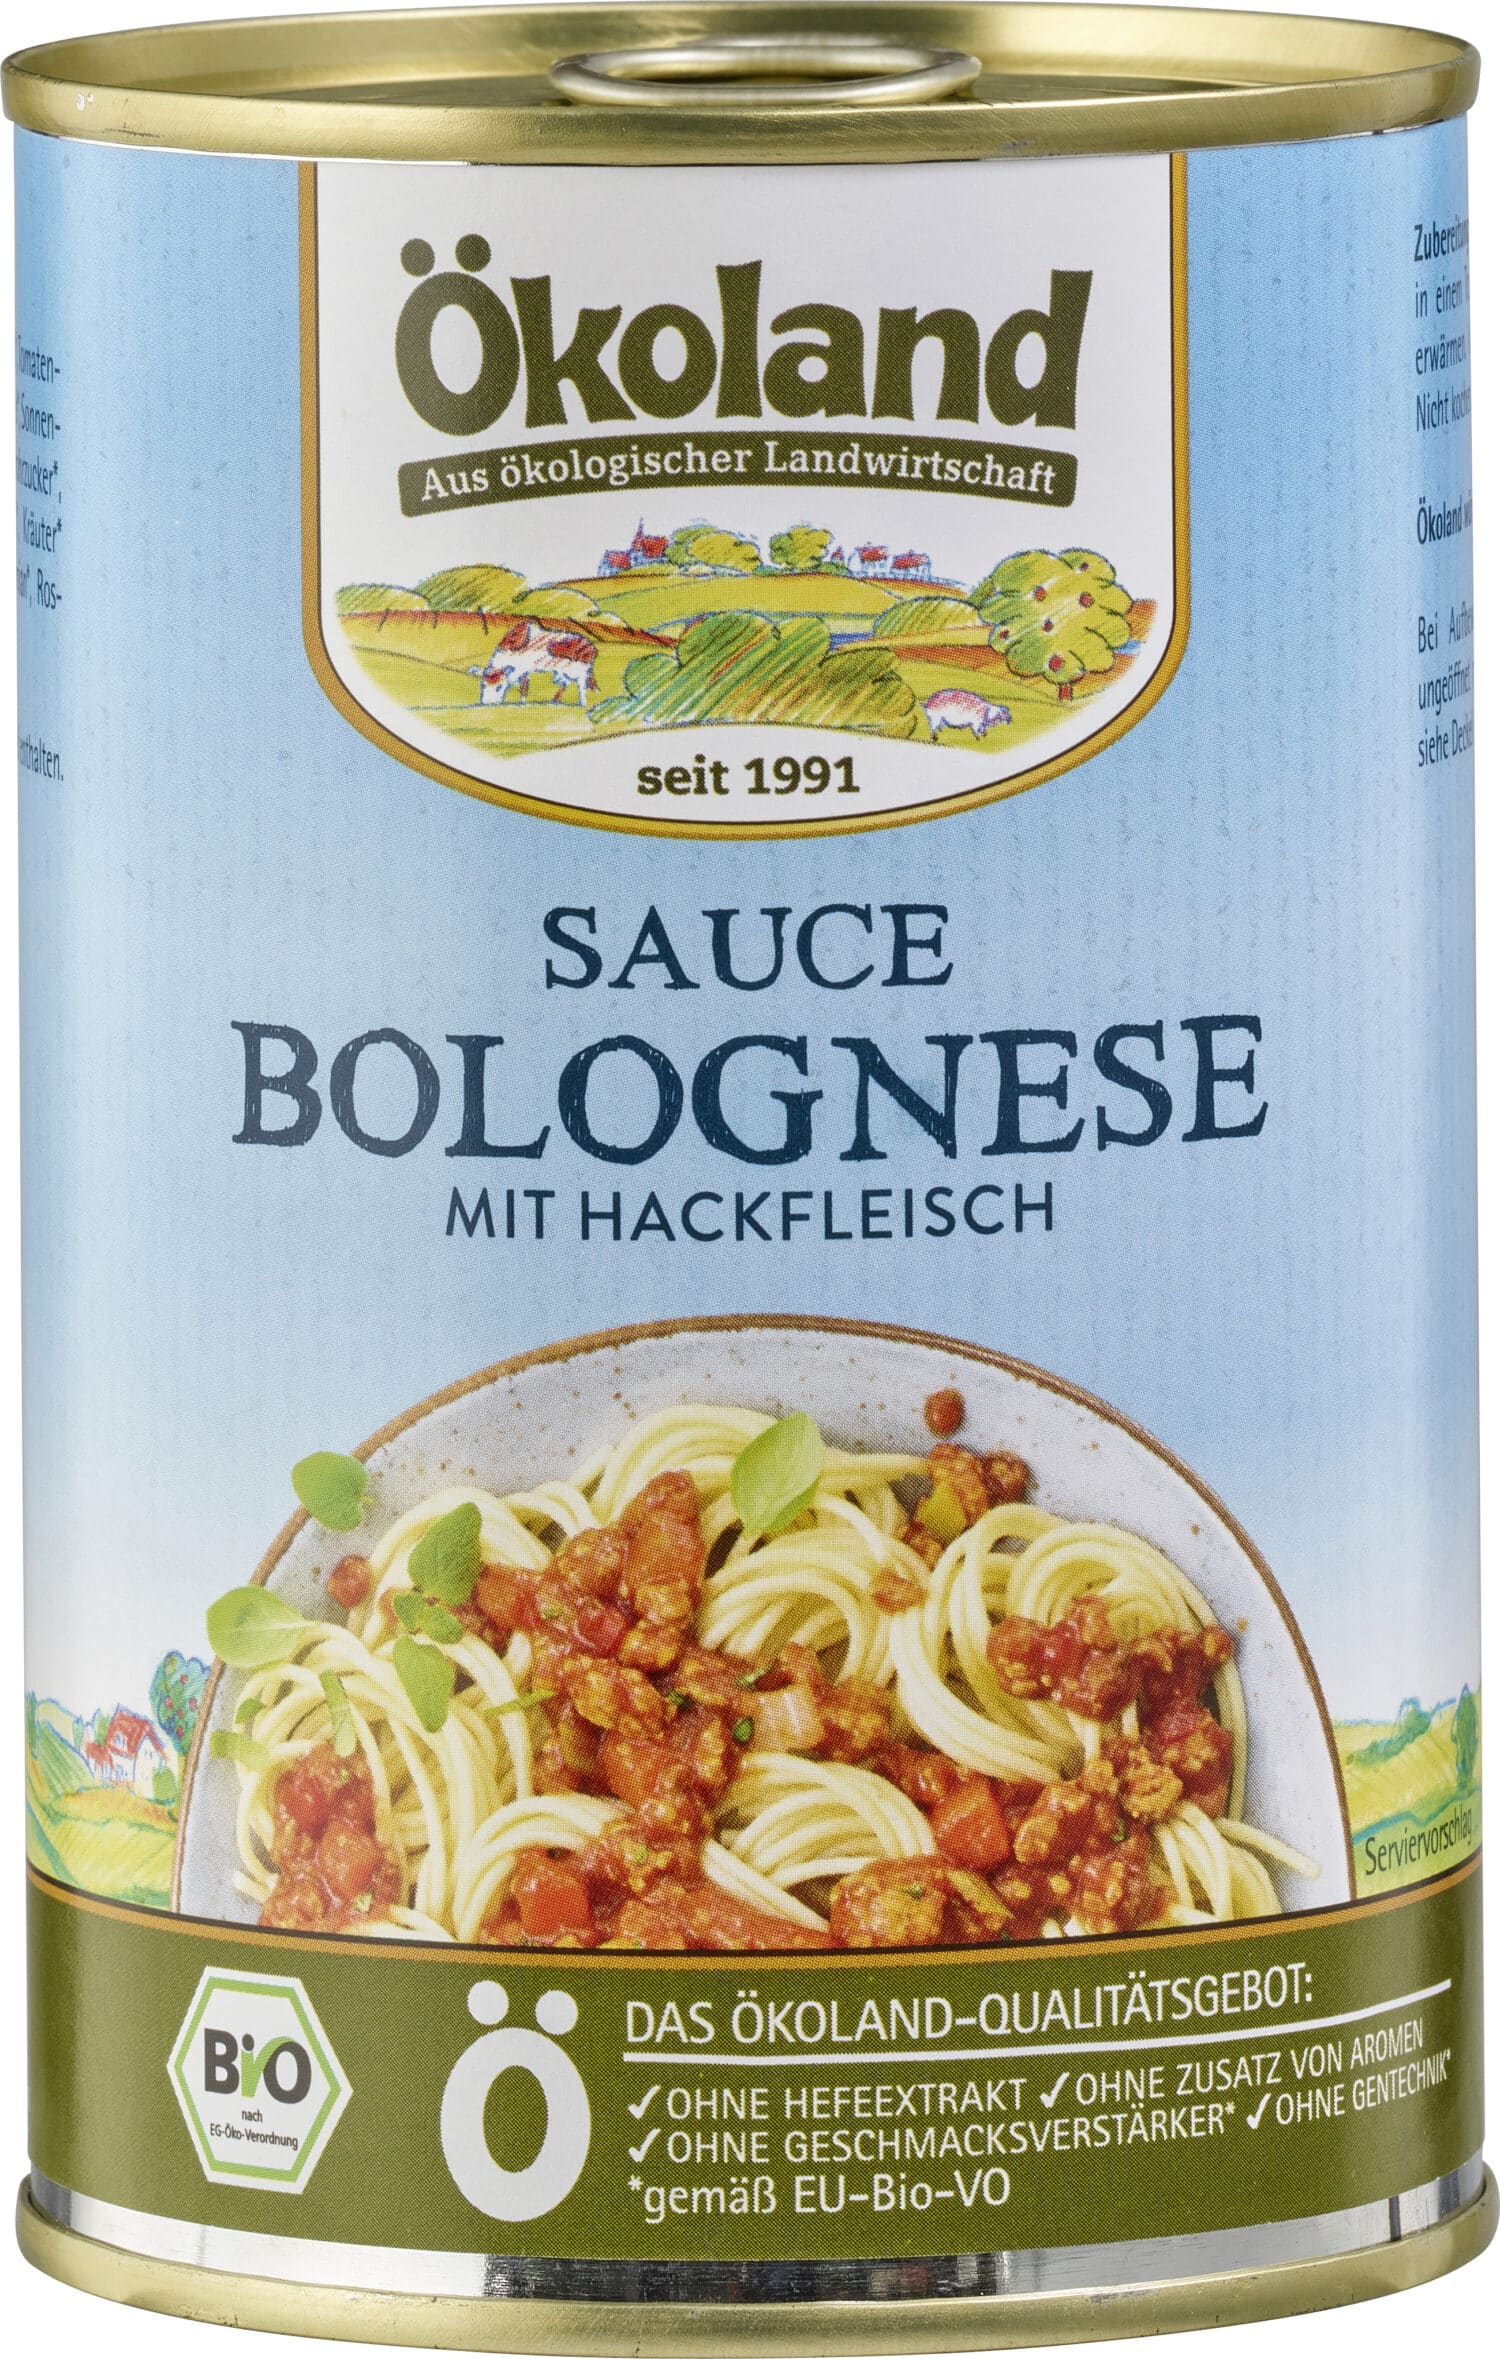 Sauce Bolognese mit Hackfleisch